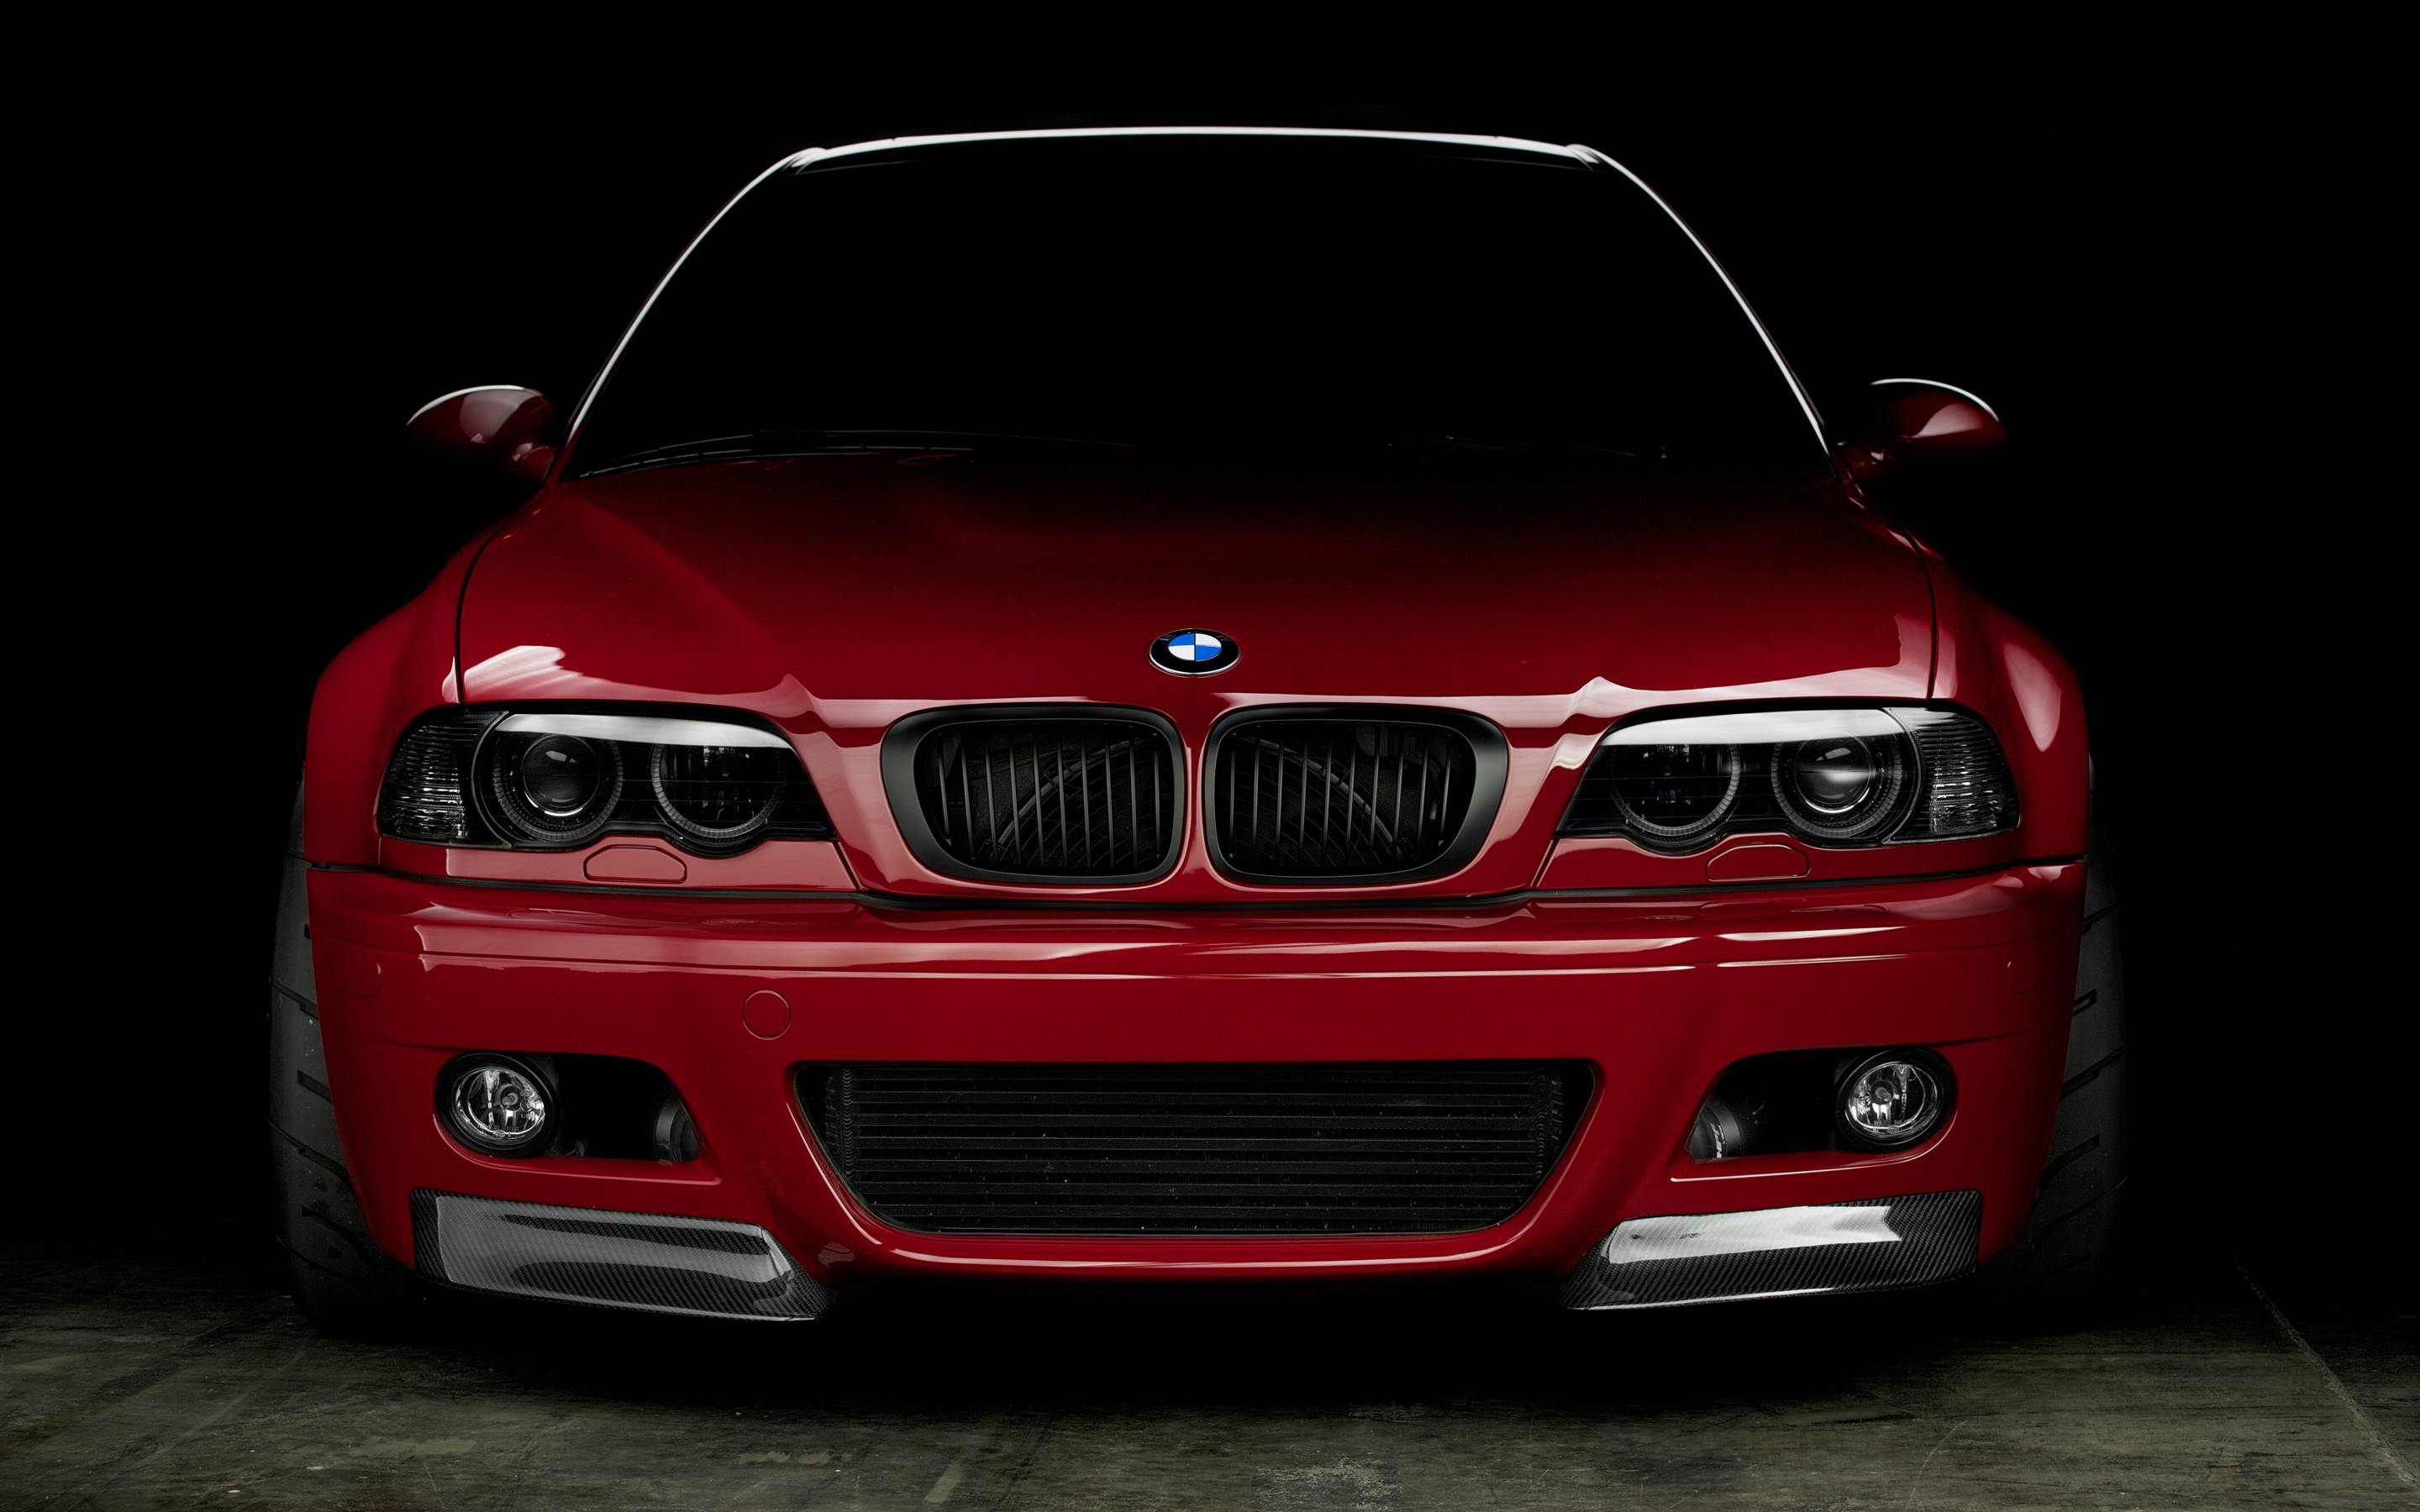 APEX Wallpapers – Imola Red BMW E46 M3